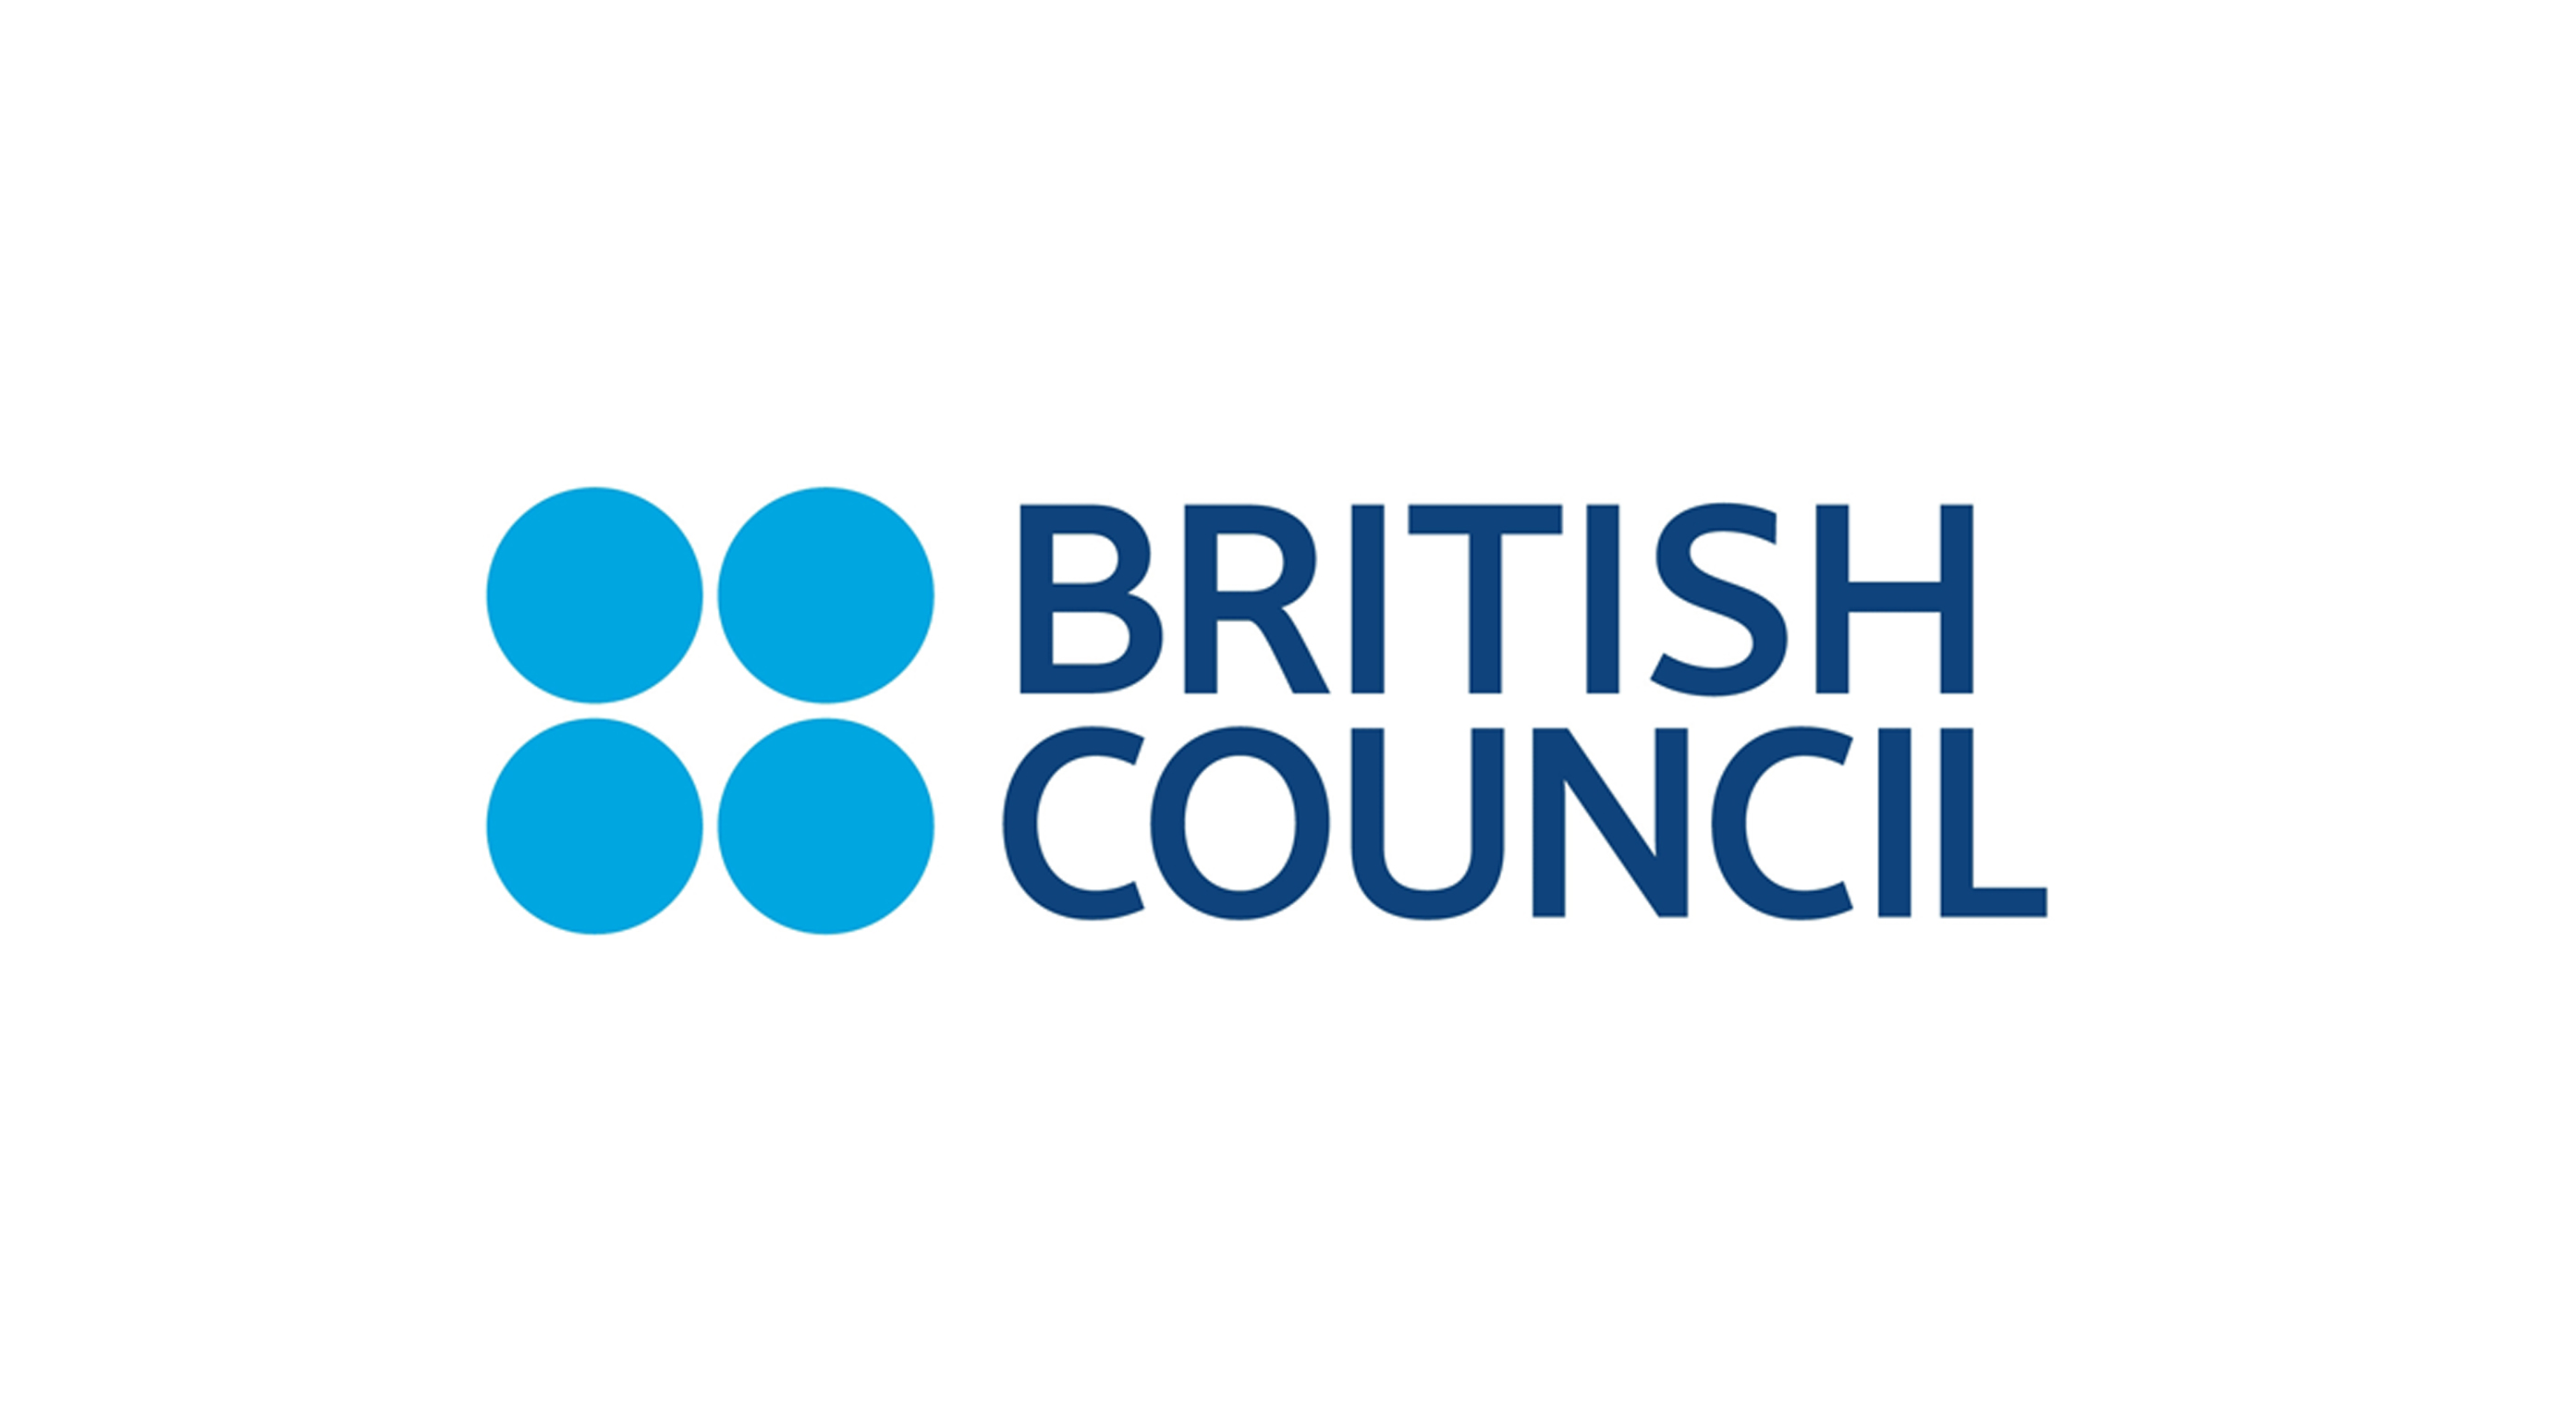 Https learnenglishteens britishcouncil org. British Council. Бритиш Консул. Британский совет. Логотип.